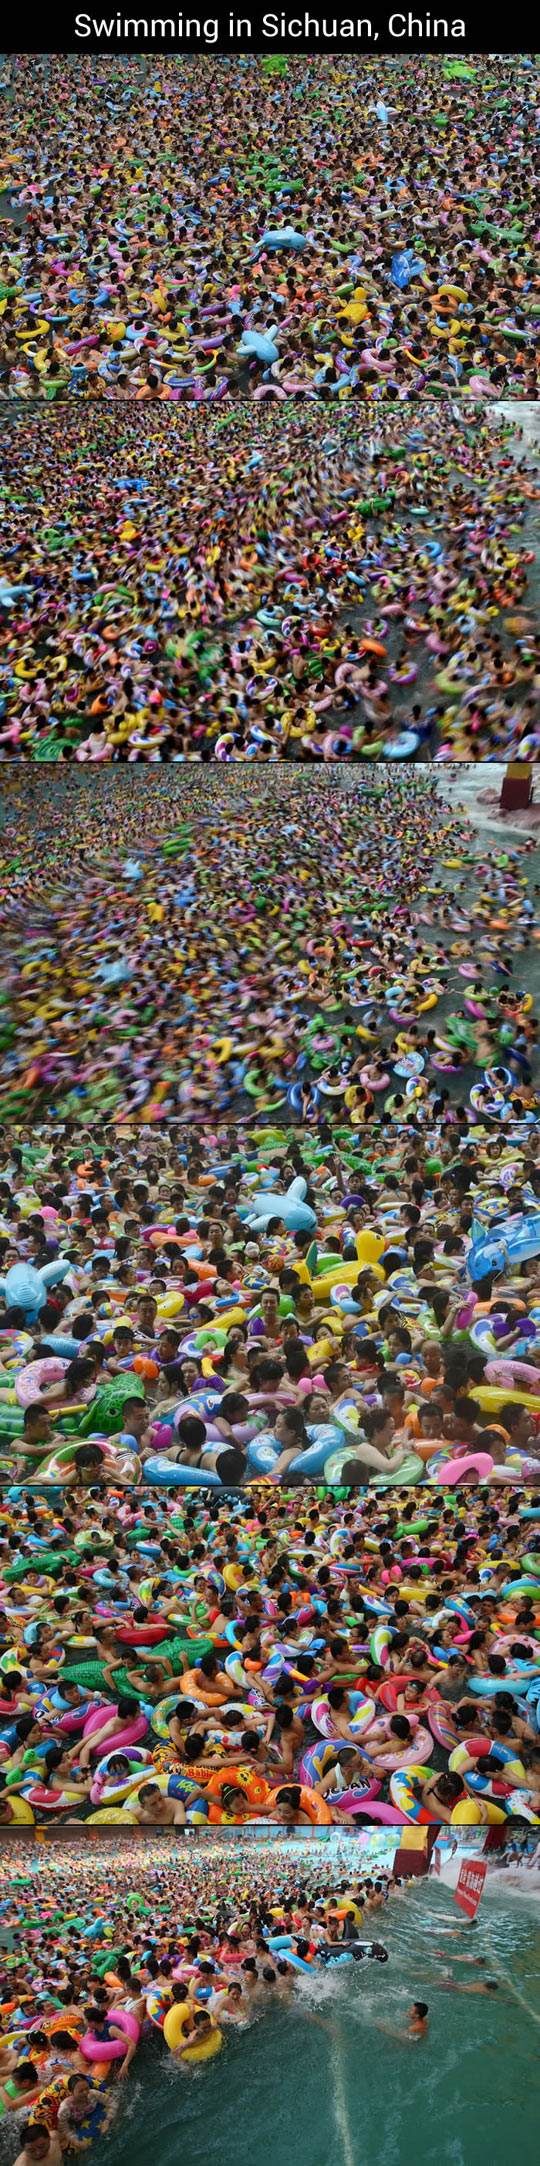 People swimming in China…